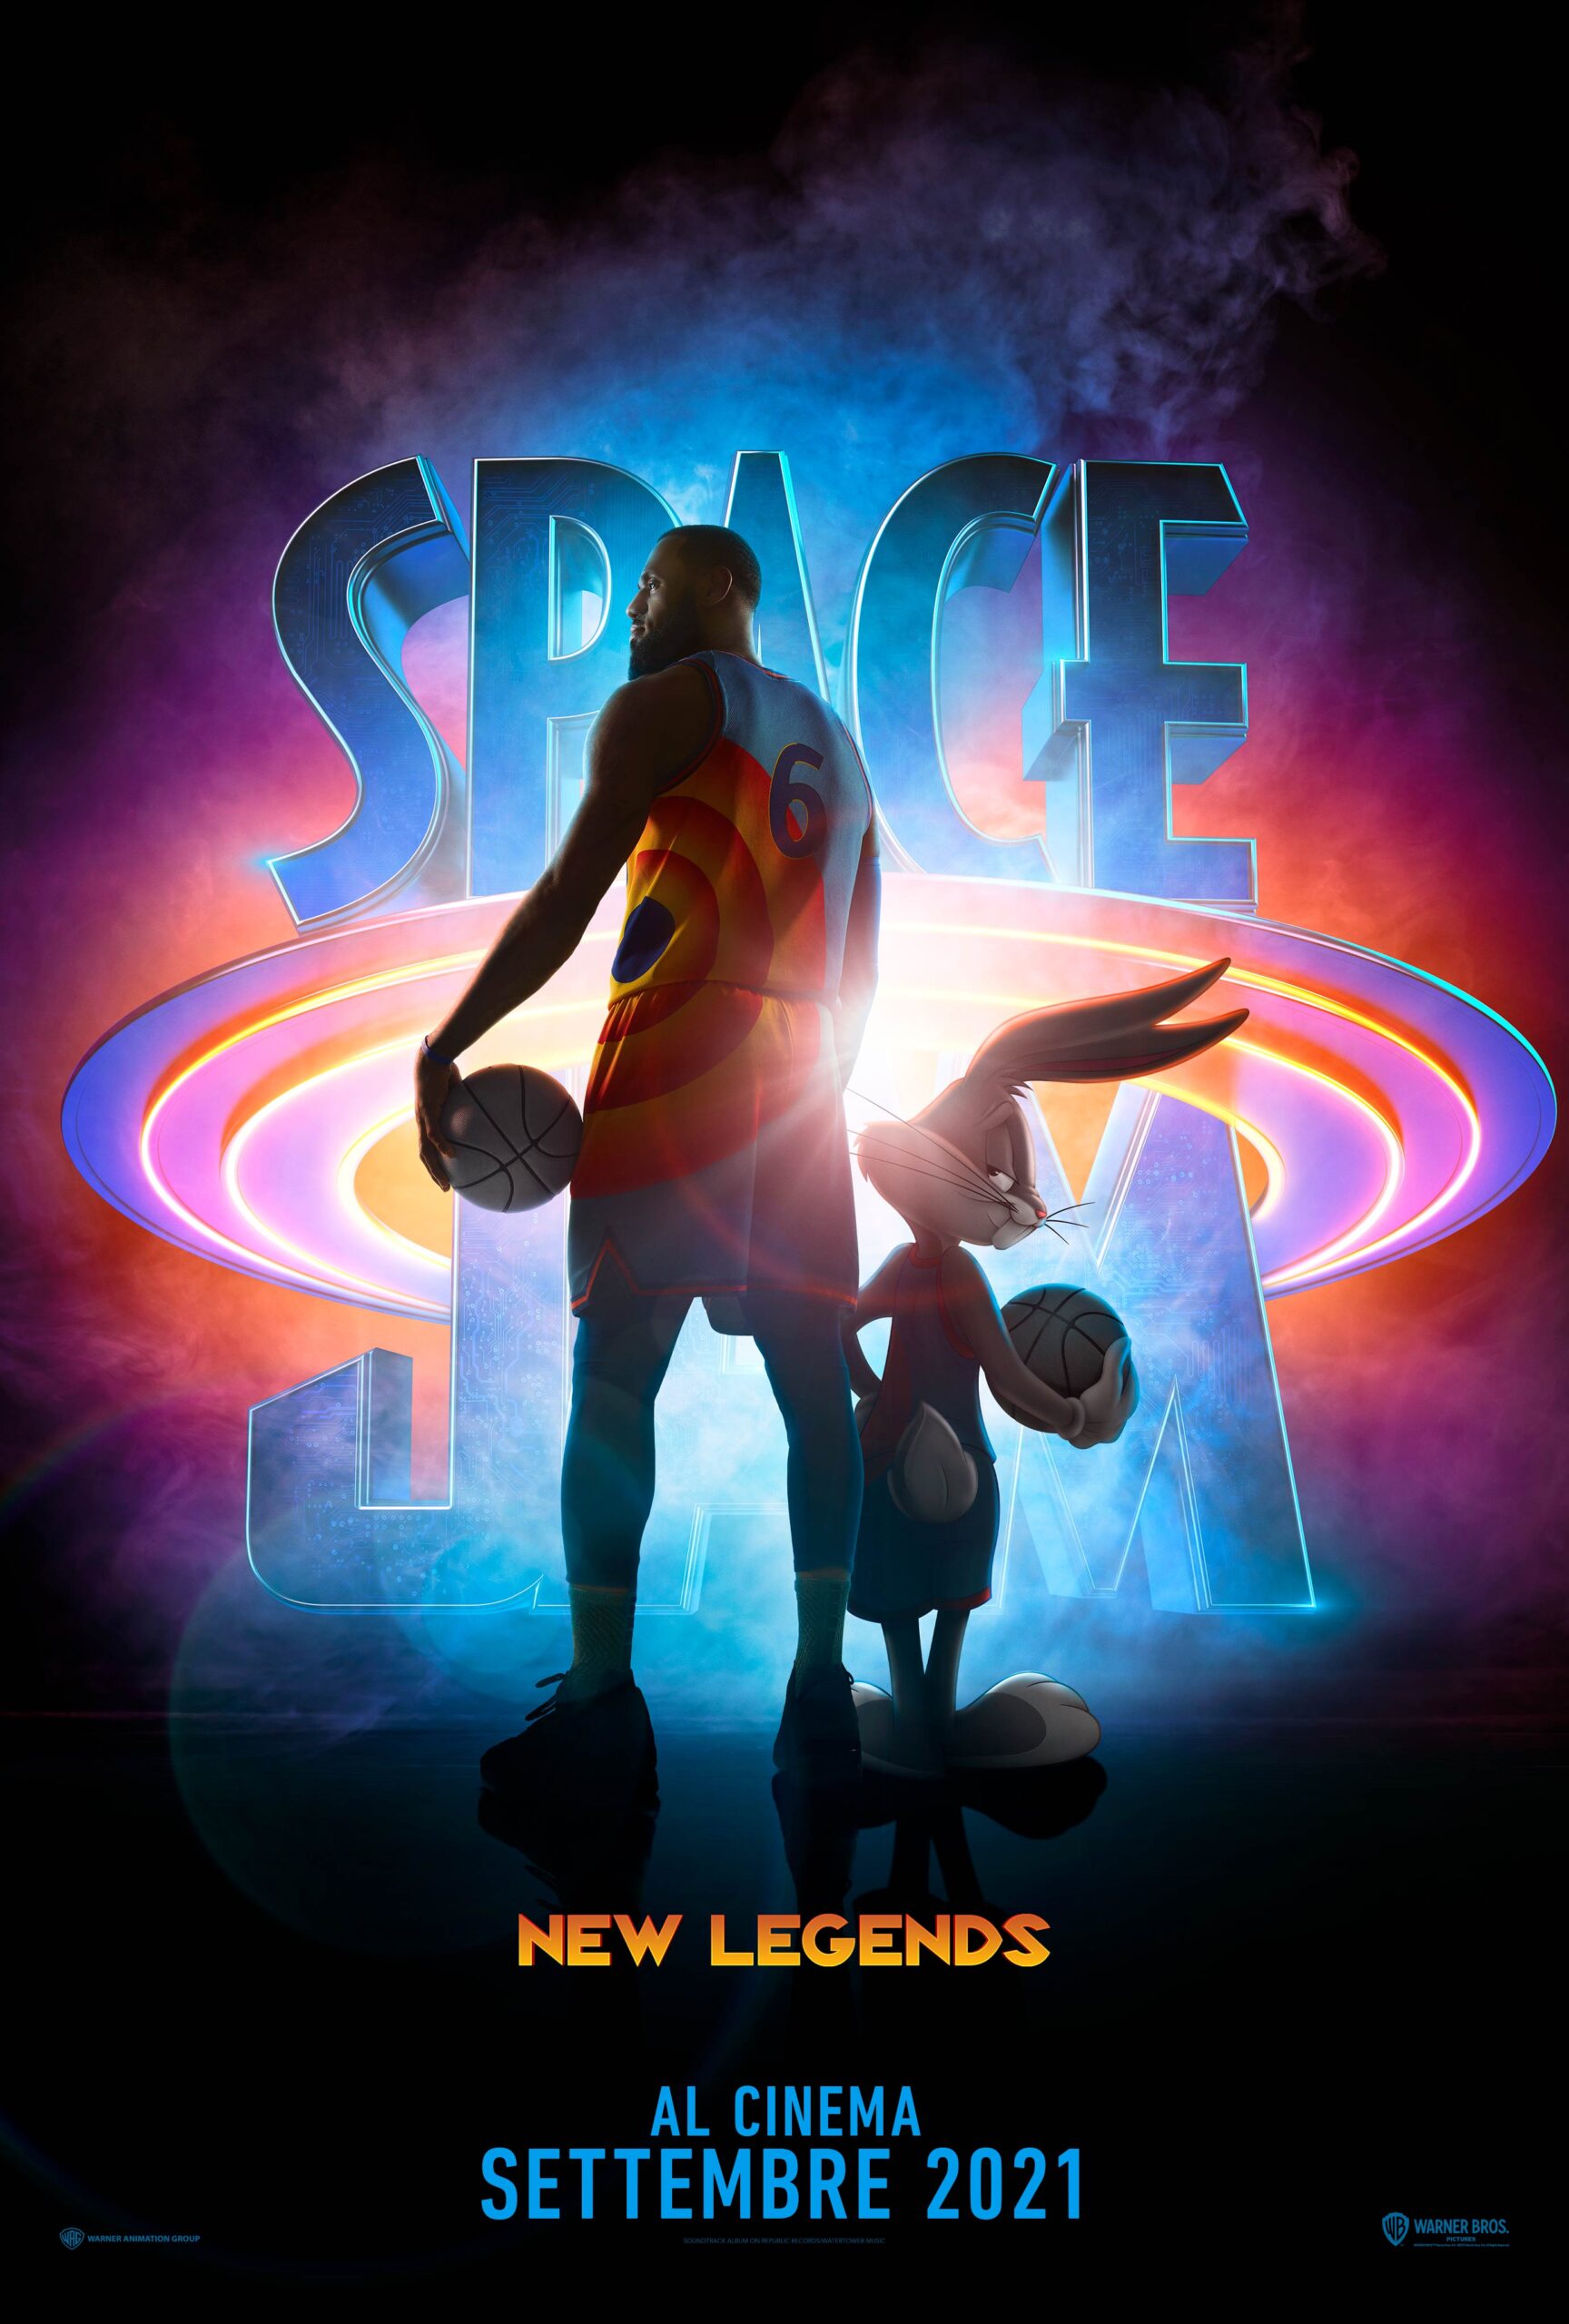 space jam new legends